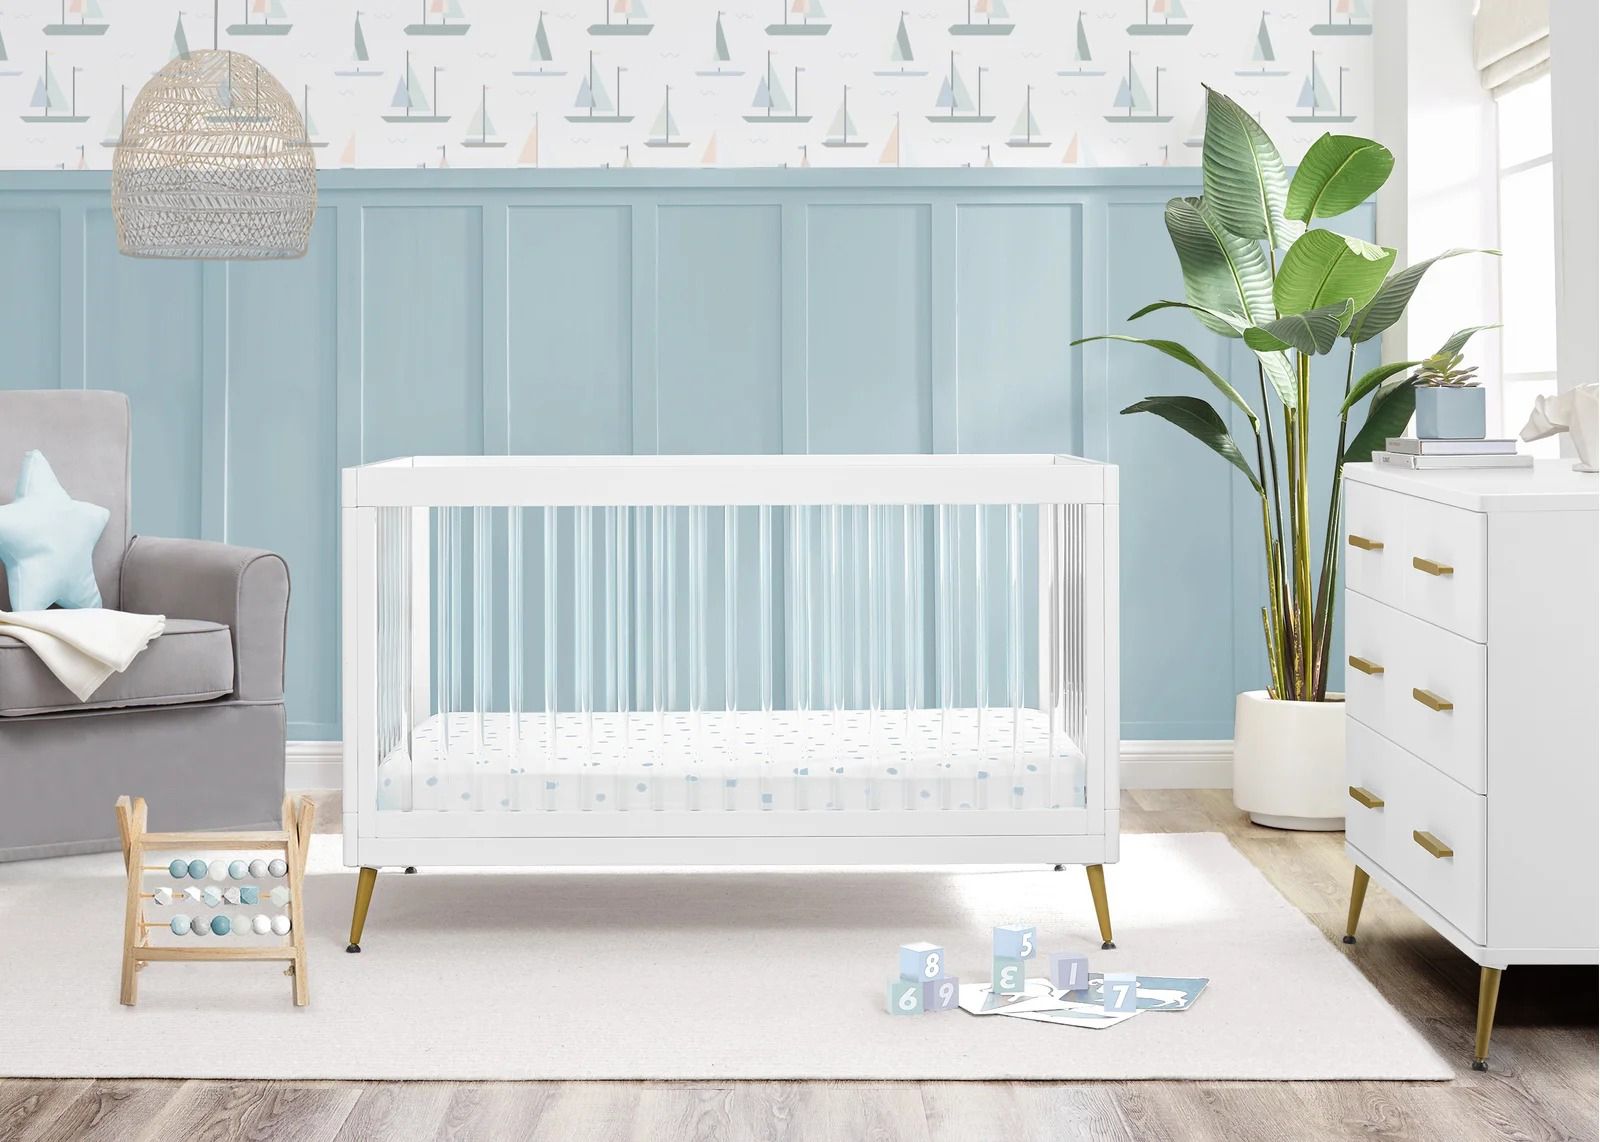 Fenwick 793 For Bedroom Polyester Children's Room Decoration Baby